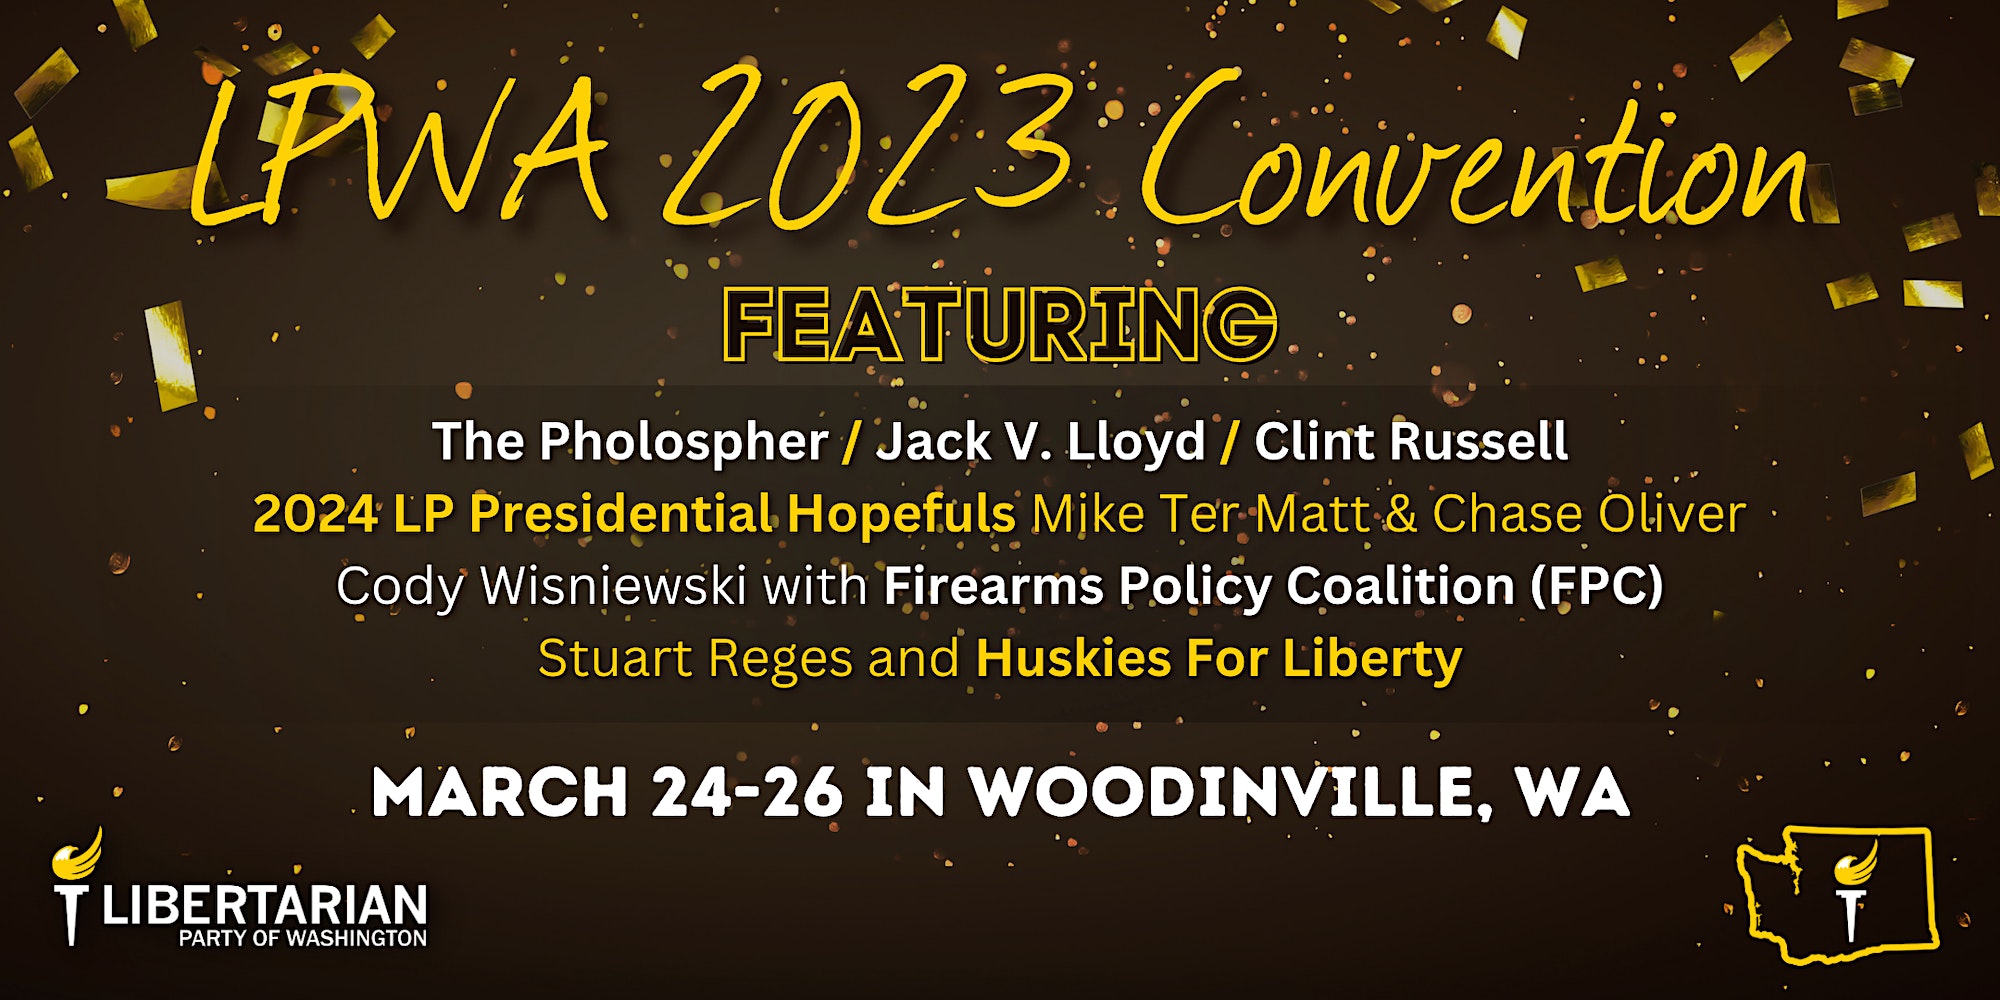 LPWA 2023 Convention Libertarian Party of Washington